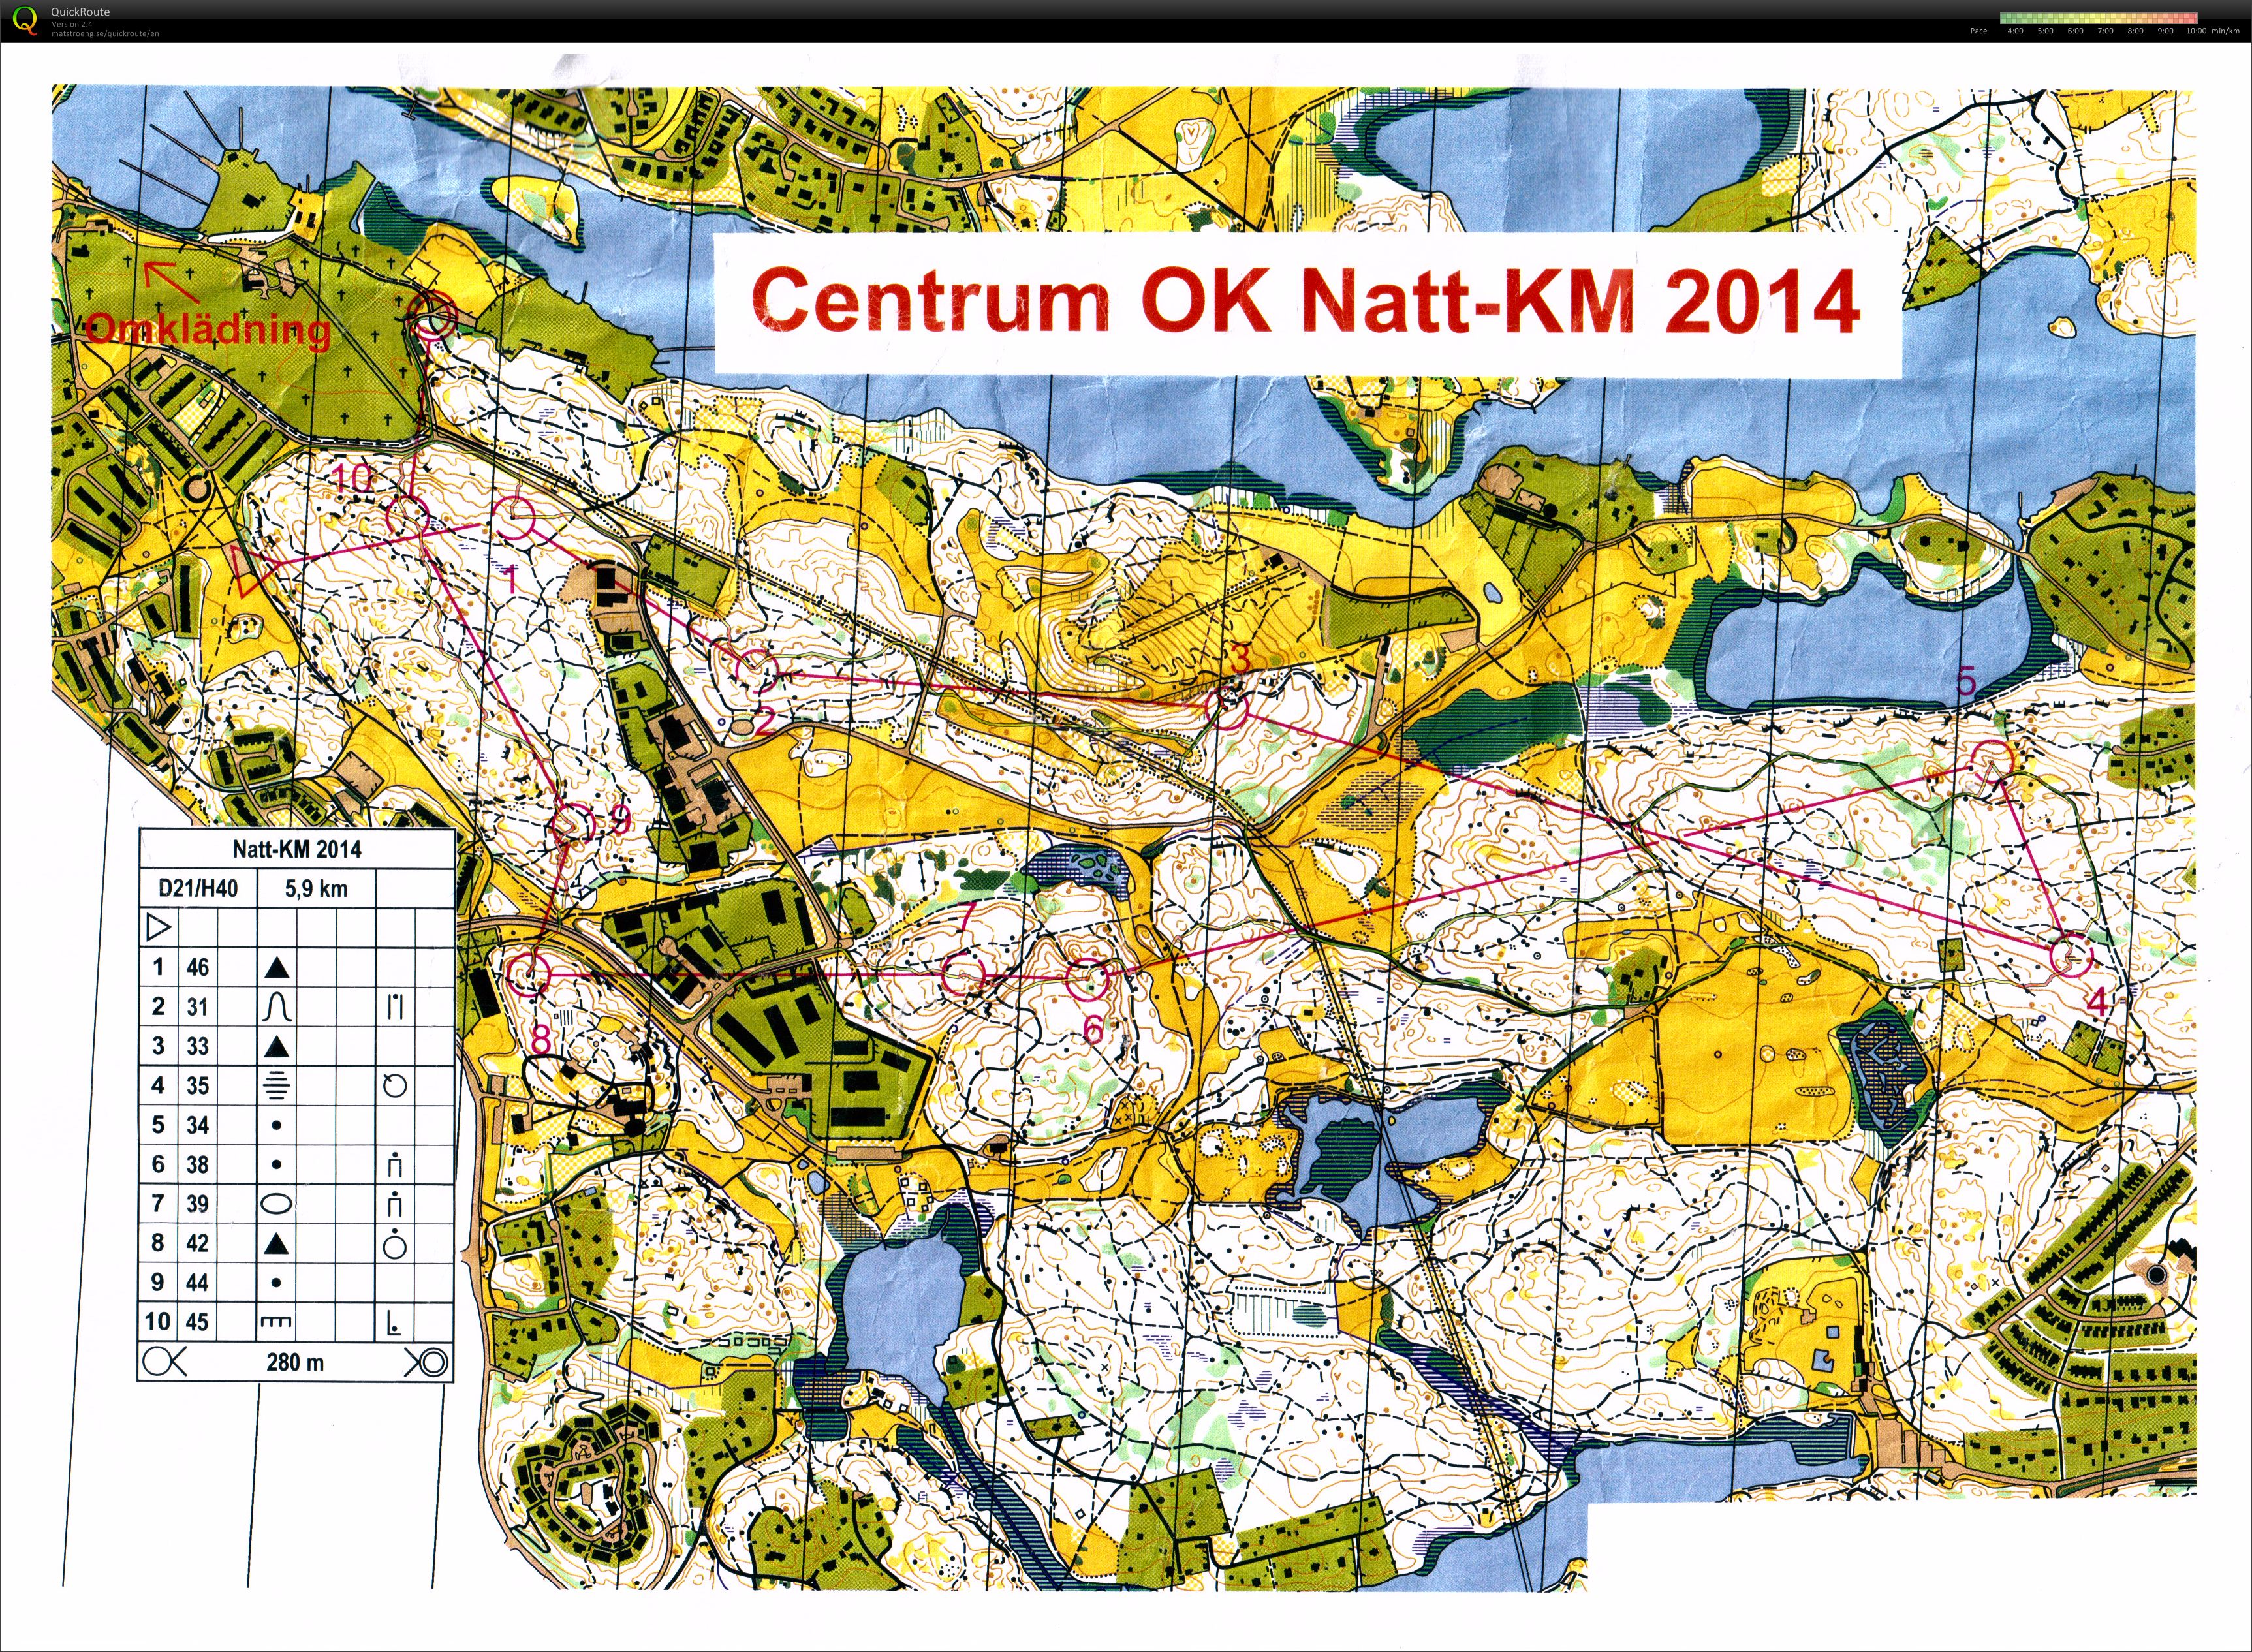 Centrum OK:s Natt-KM (06/11/2014)